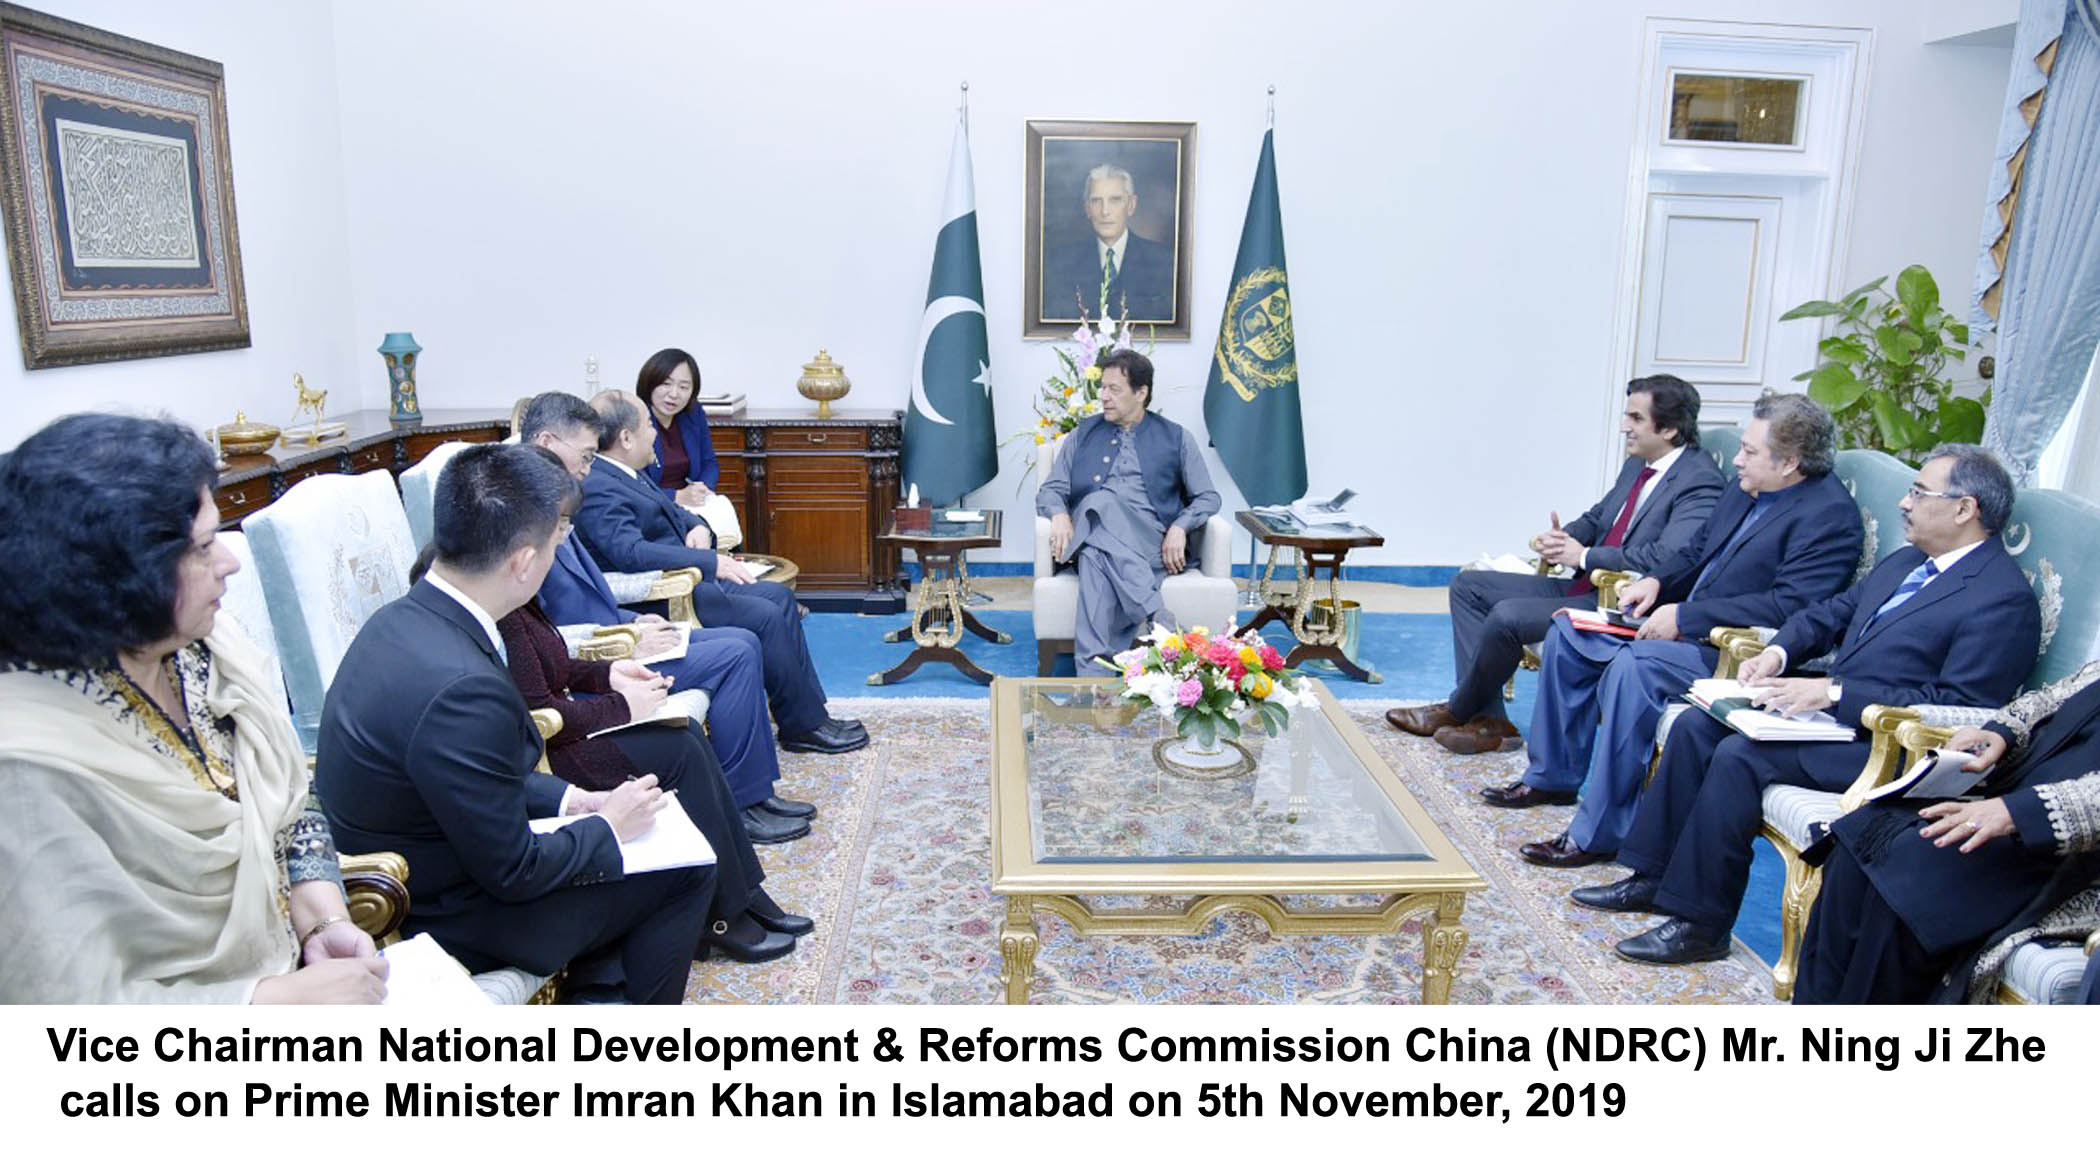 Vice Chairman of NDRC, Mr. Ning Jizhe, called on Prime Minister Imran Khan on 5 November 2019